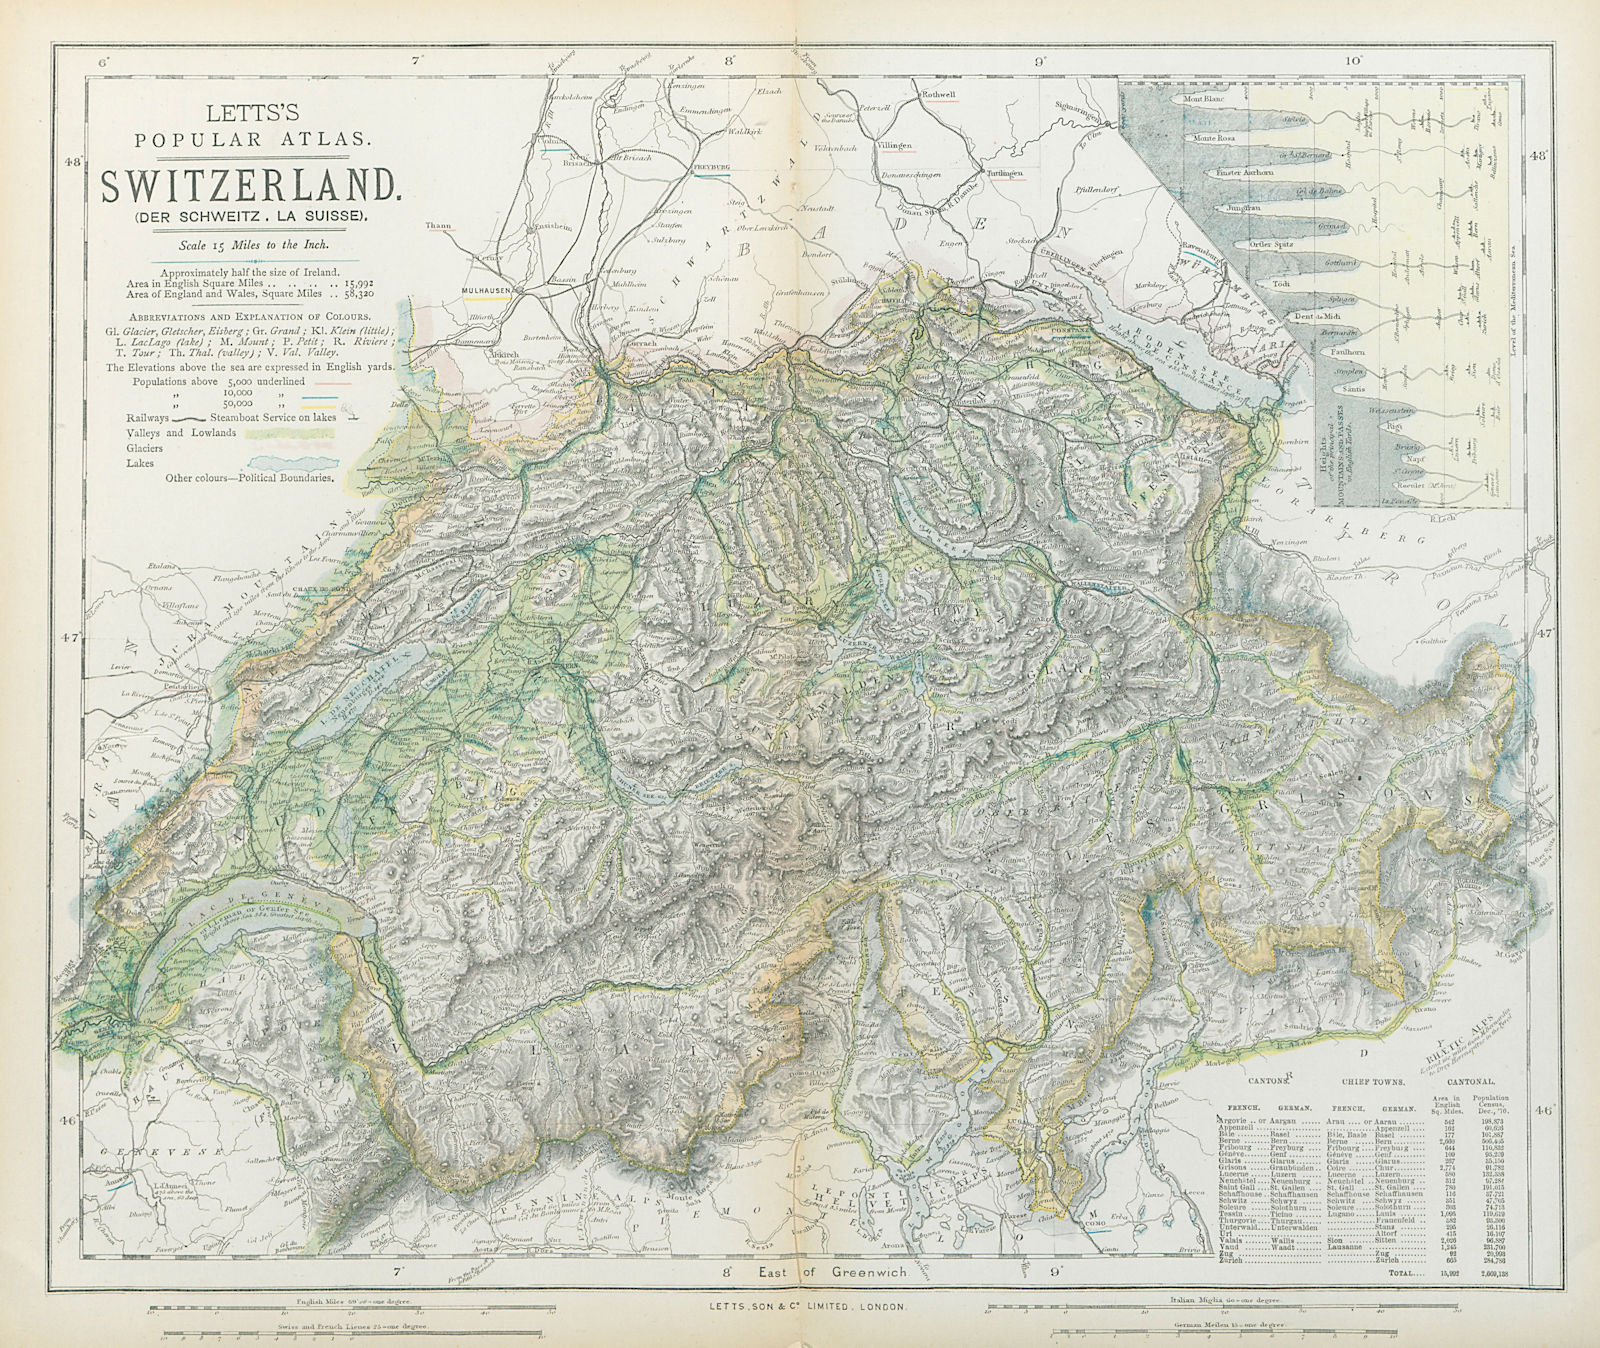 SWITZERLAND SCHWEIZ SUISSE w/Glaciers. Mountain heights & passes. LETTS 1883 map